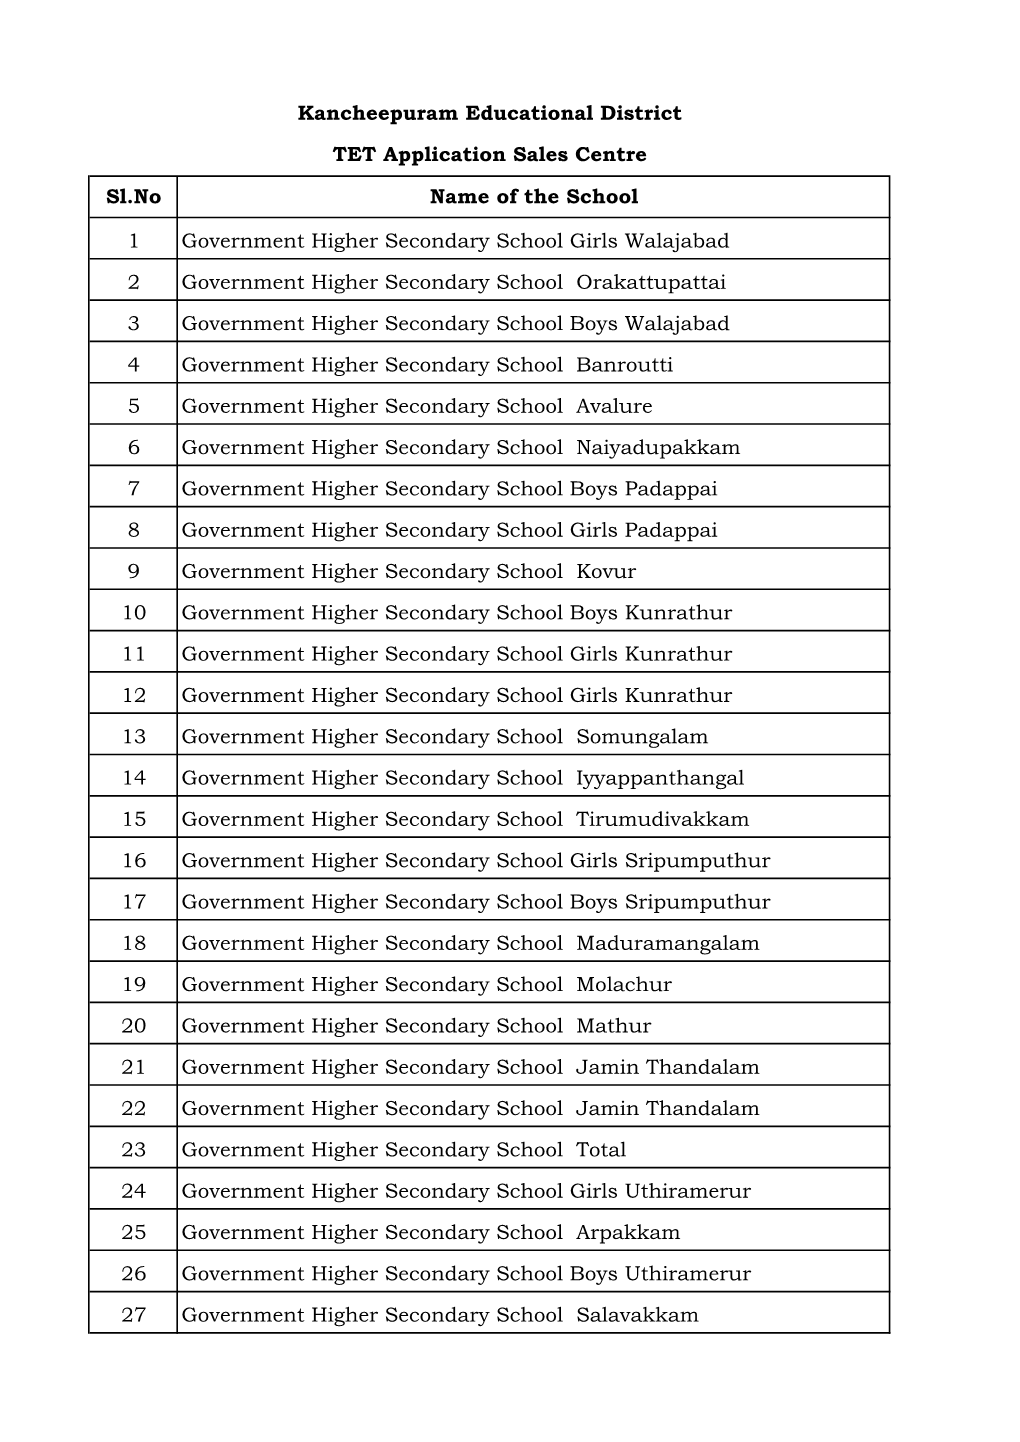 Sl.No Name of the School 1 Government Higher Secondary School Girls Walajabad 2 Government Higher Secondary School Orakattupatt